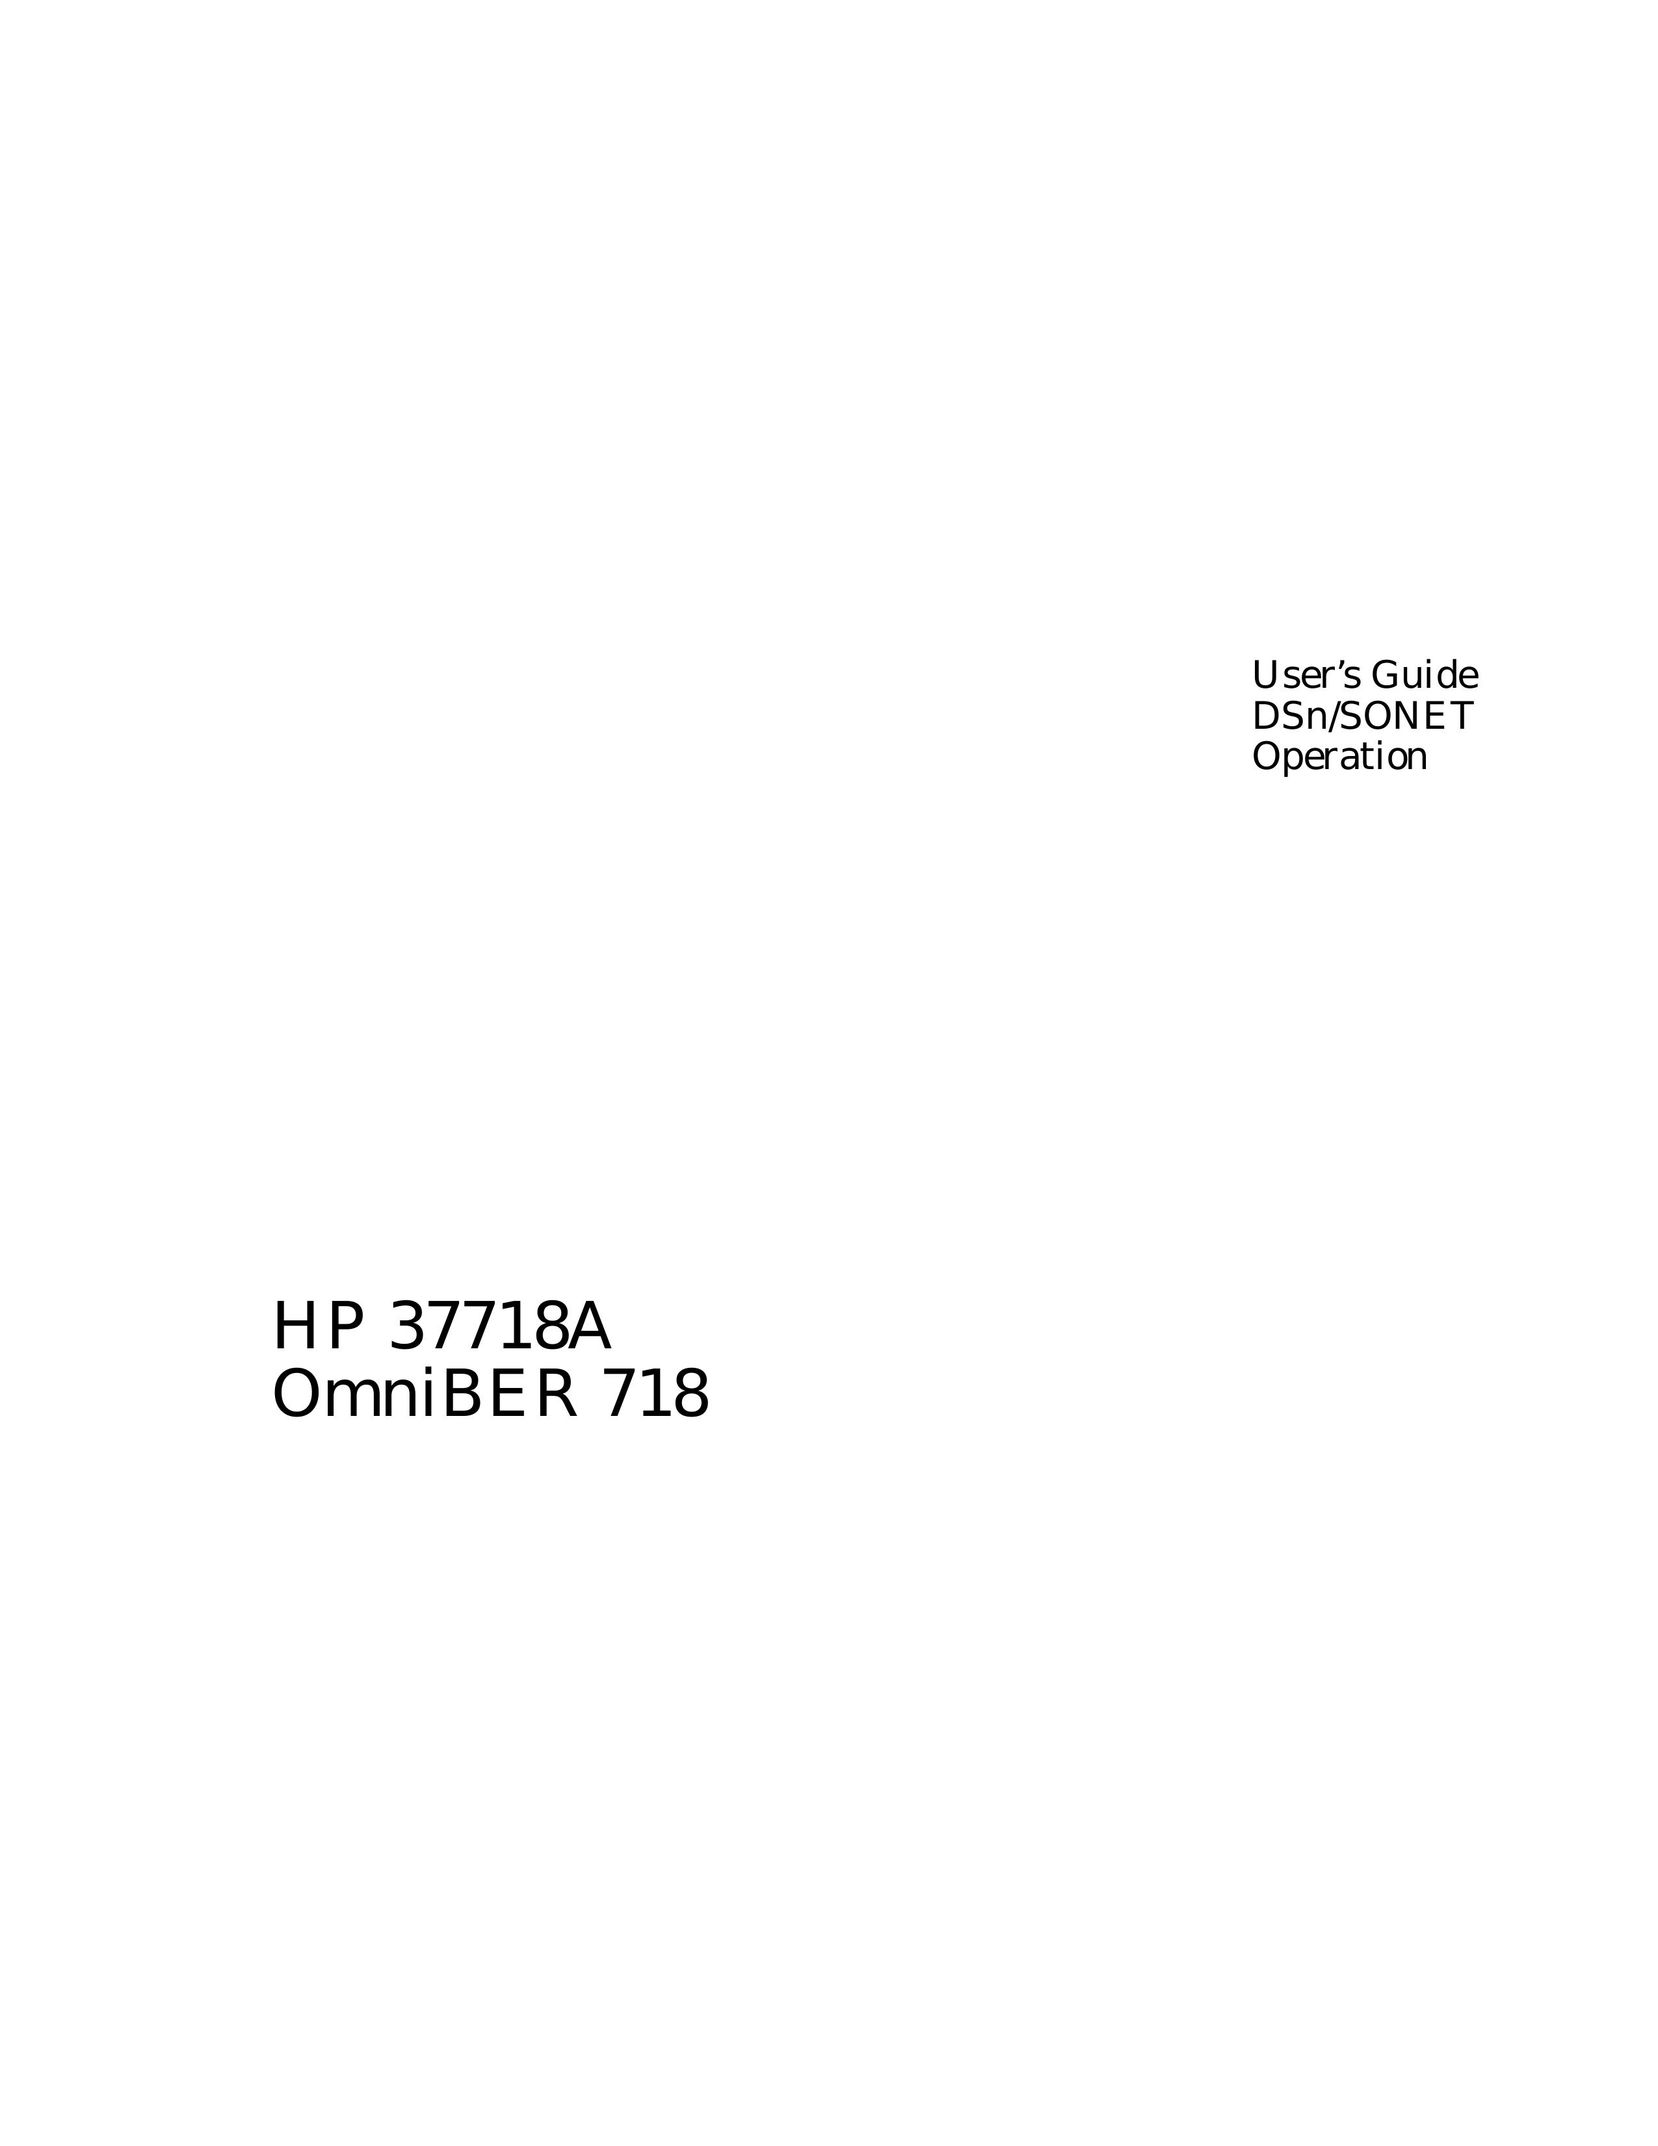 HP (Hewlett-Packard) HP 37718A Satellite Radio User Manual